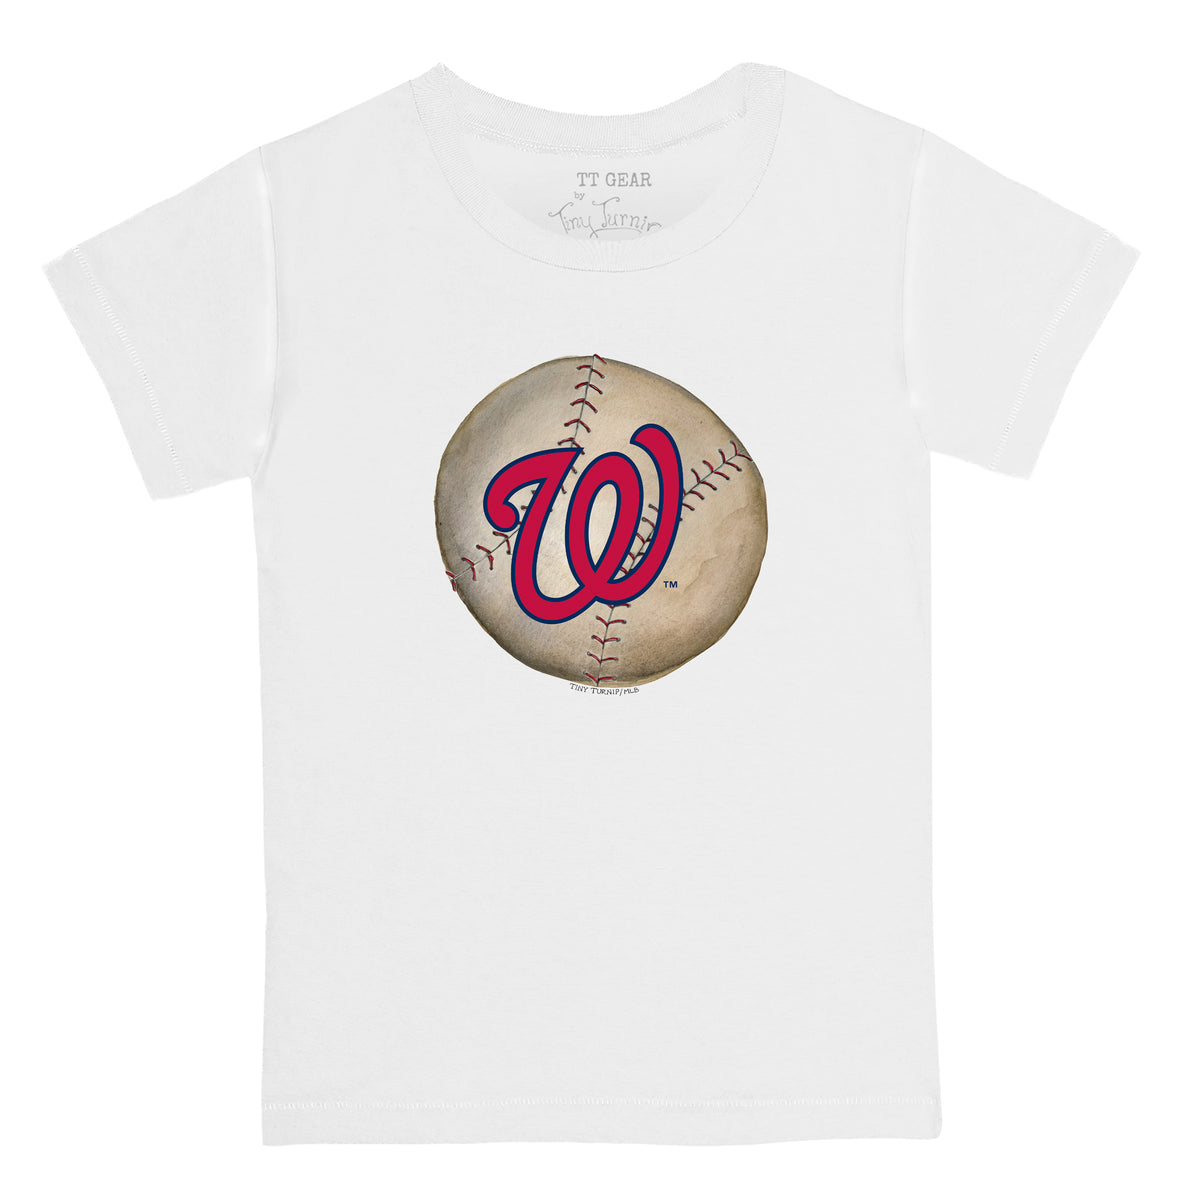 Washington Nationals Stitched Baseball Tee Shirt